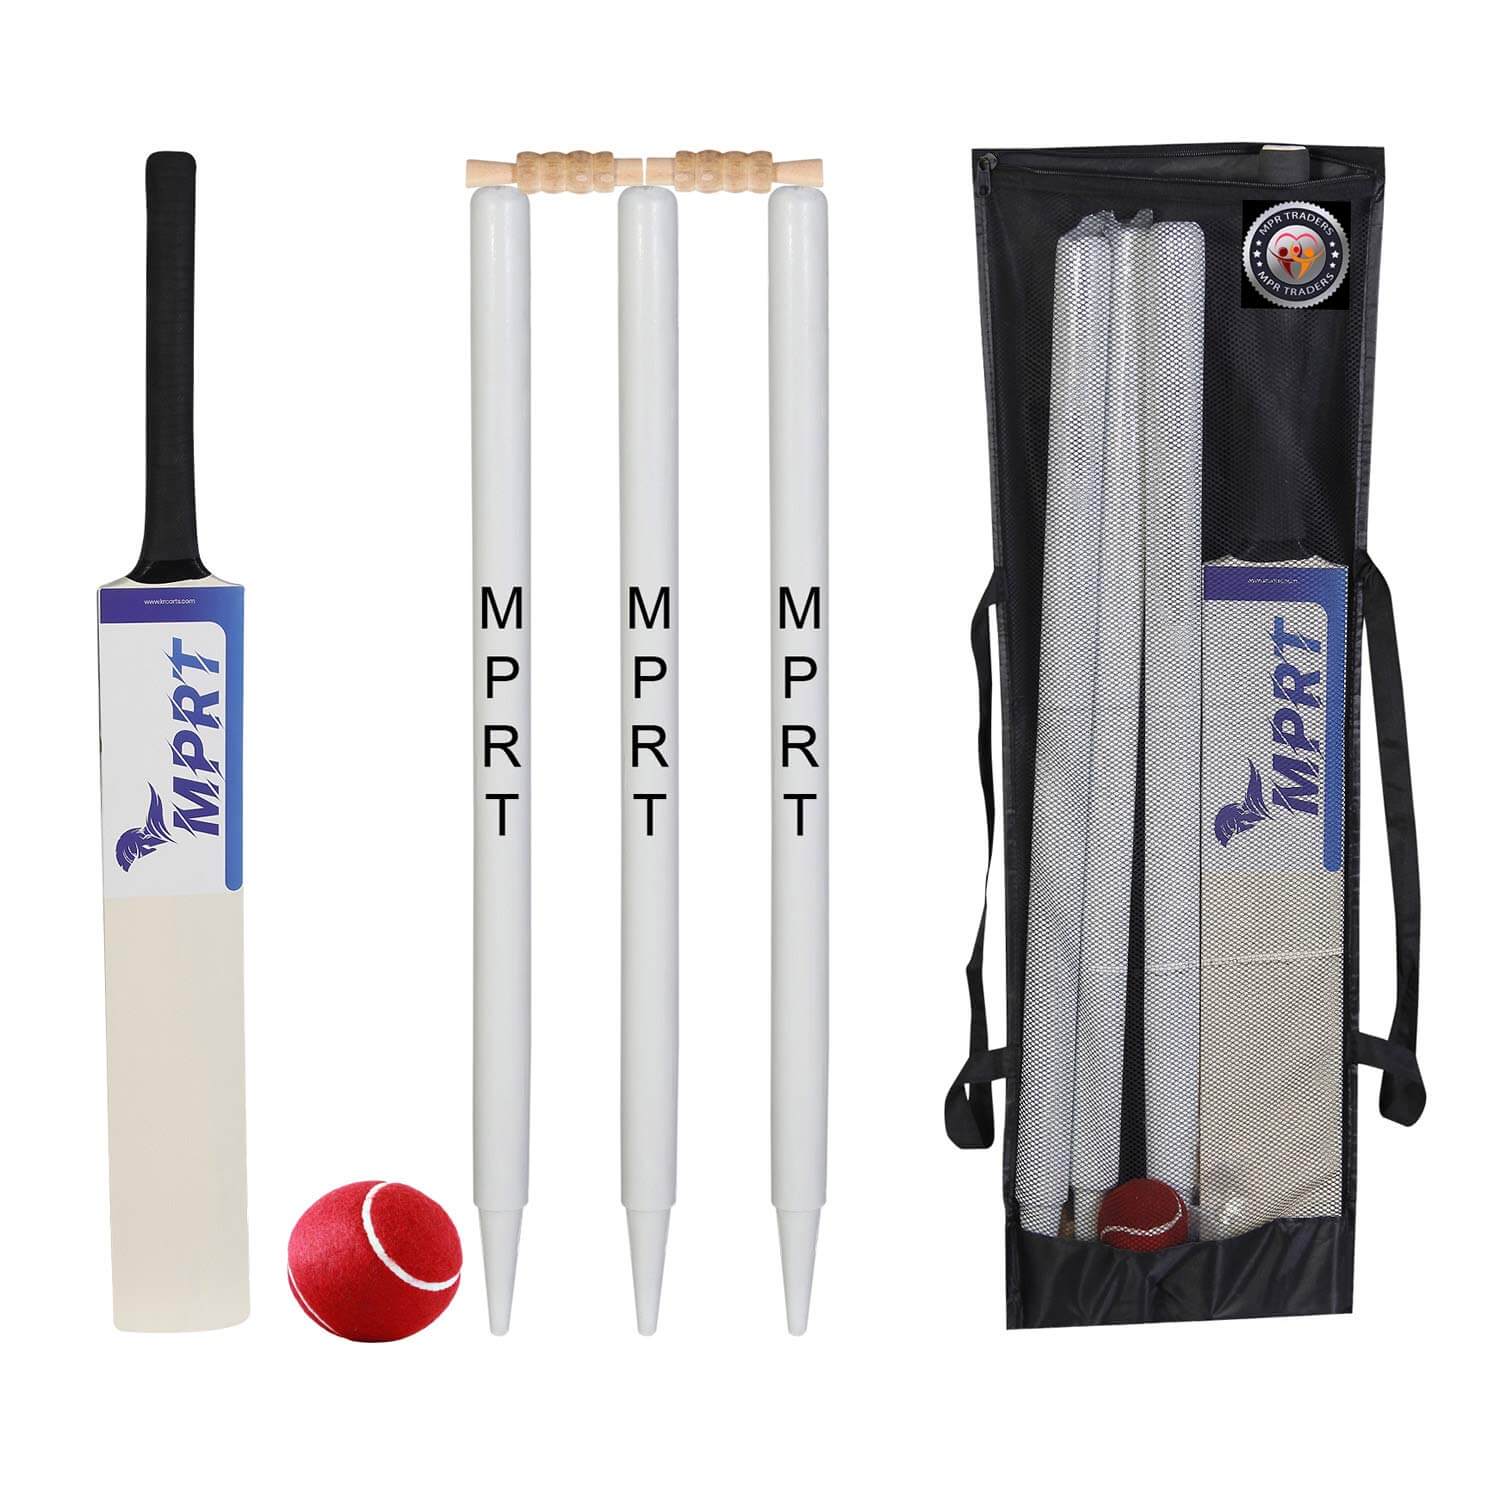 MPRT Wooden Cricket Kit for Tennis Ball Combo 